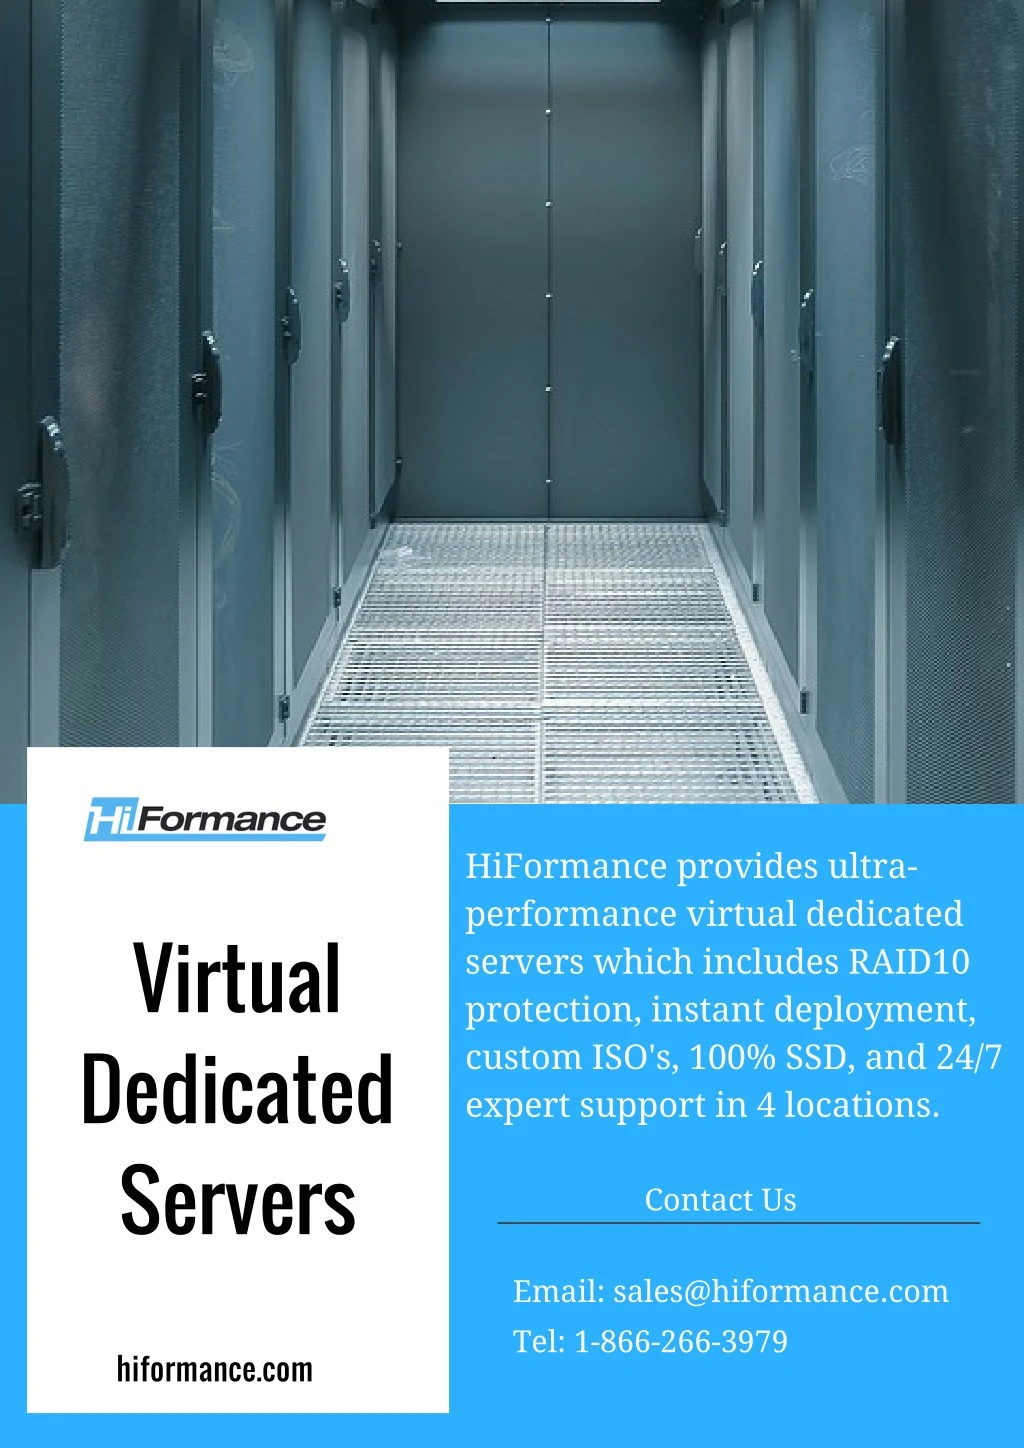 hiformance provides ultra performance virtual